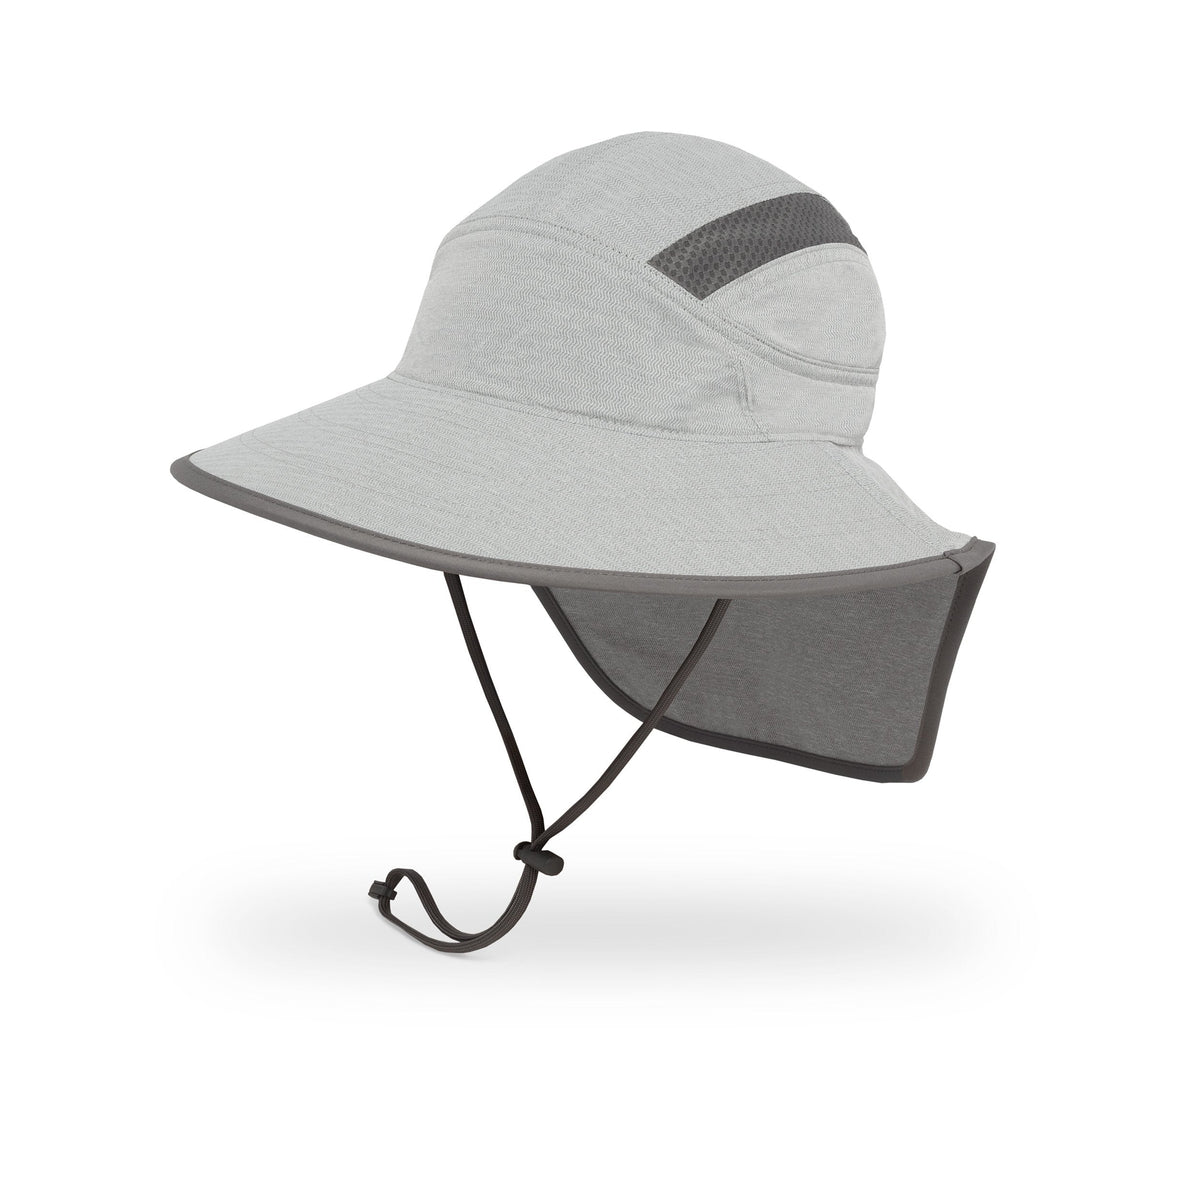 Toddler Sun Hat UPF 50 Sun Protection Fishing Hats for Boys  Girls,M(2-6y),Dark blue